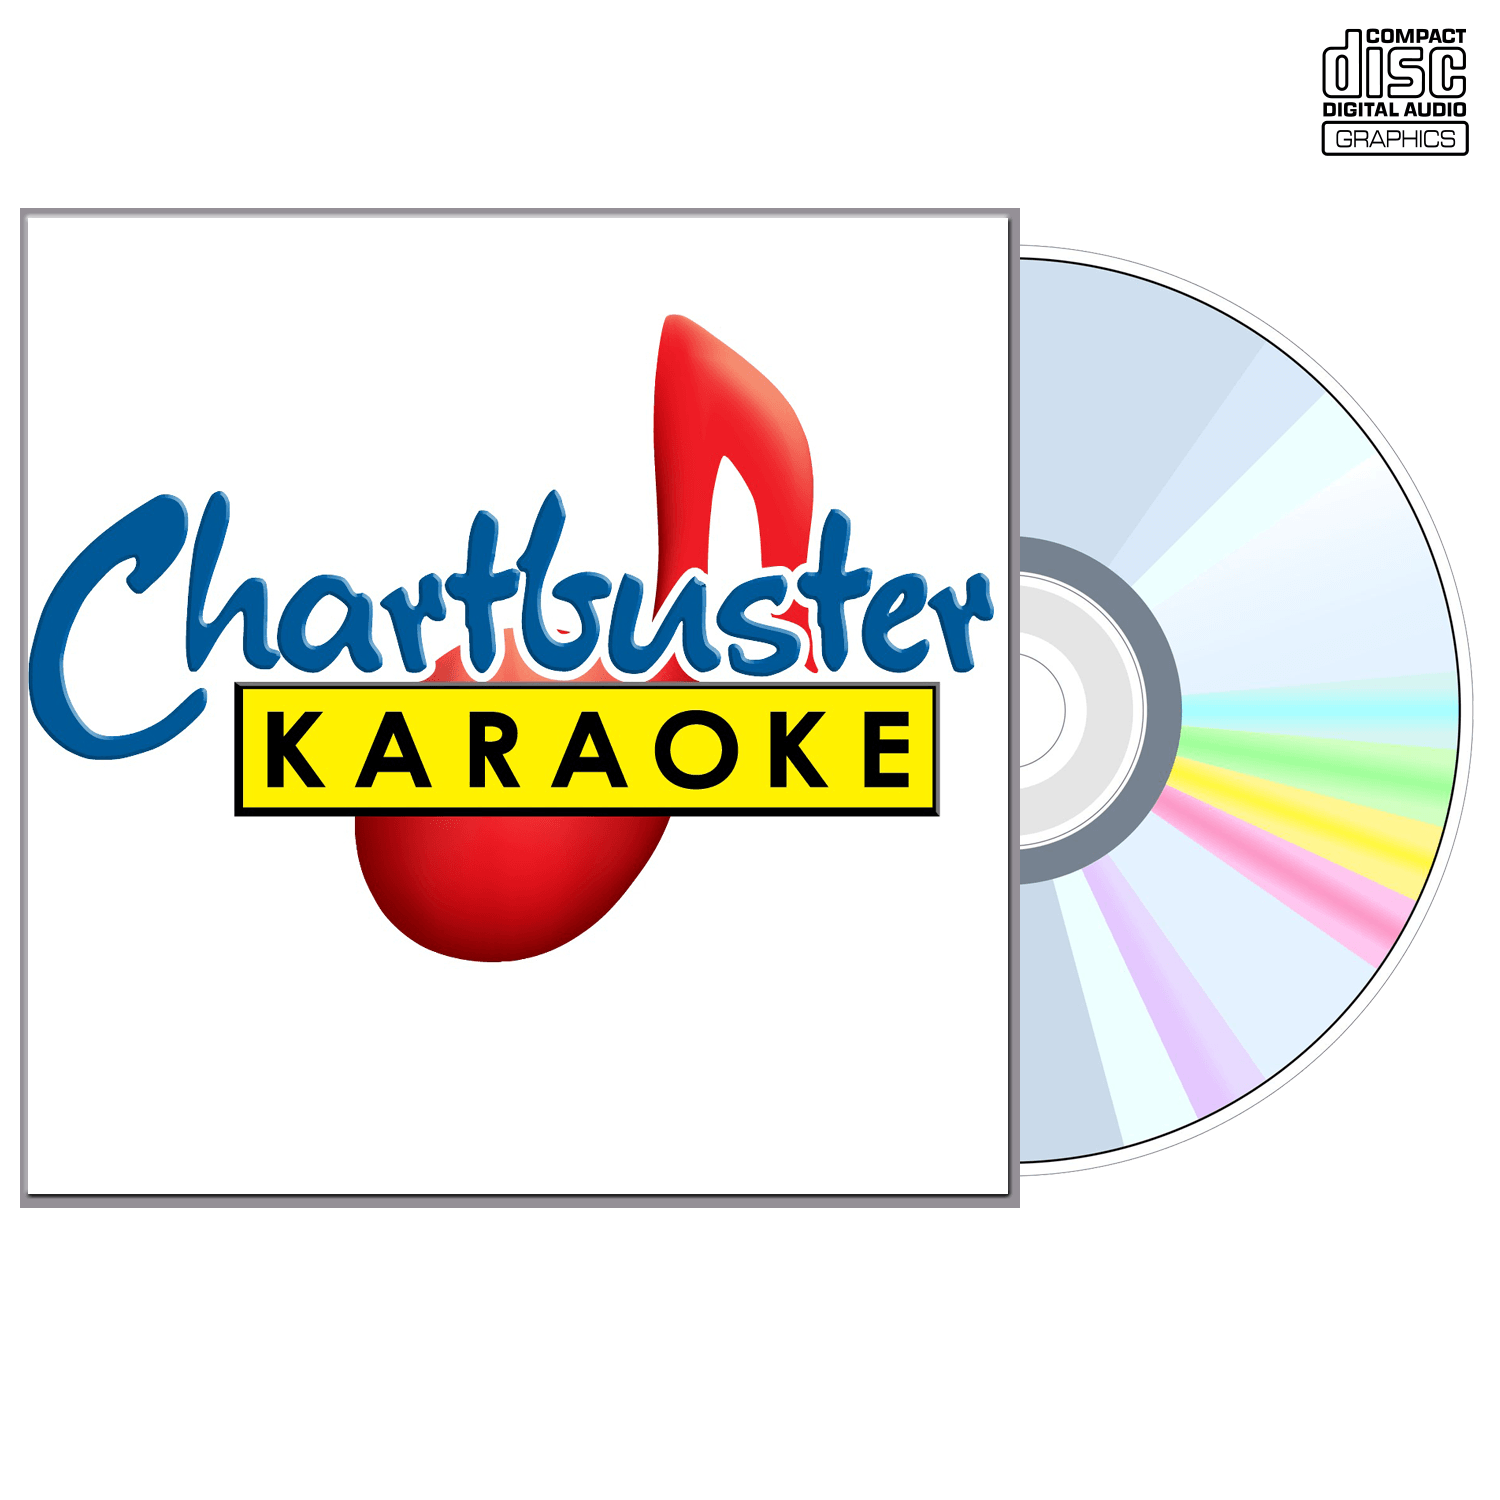 Best Of Childrens Songs - CD+G - Chartbuster Karaoke - Karaoke Home Entertainment